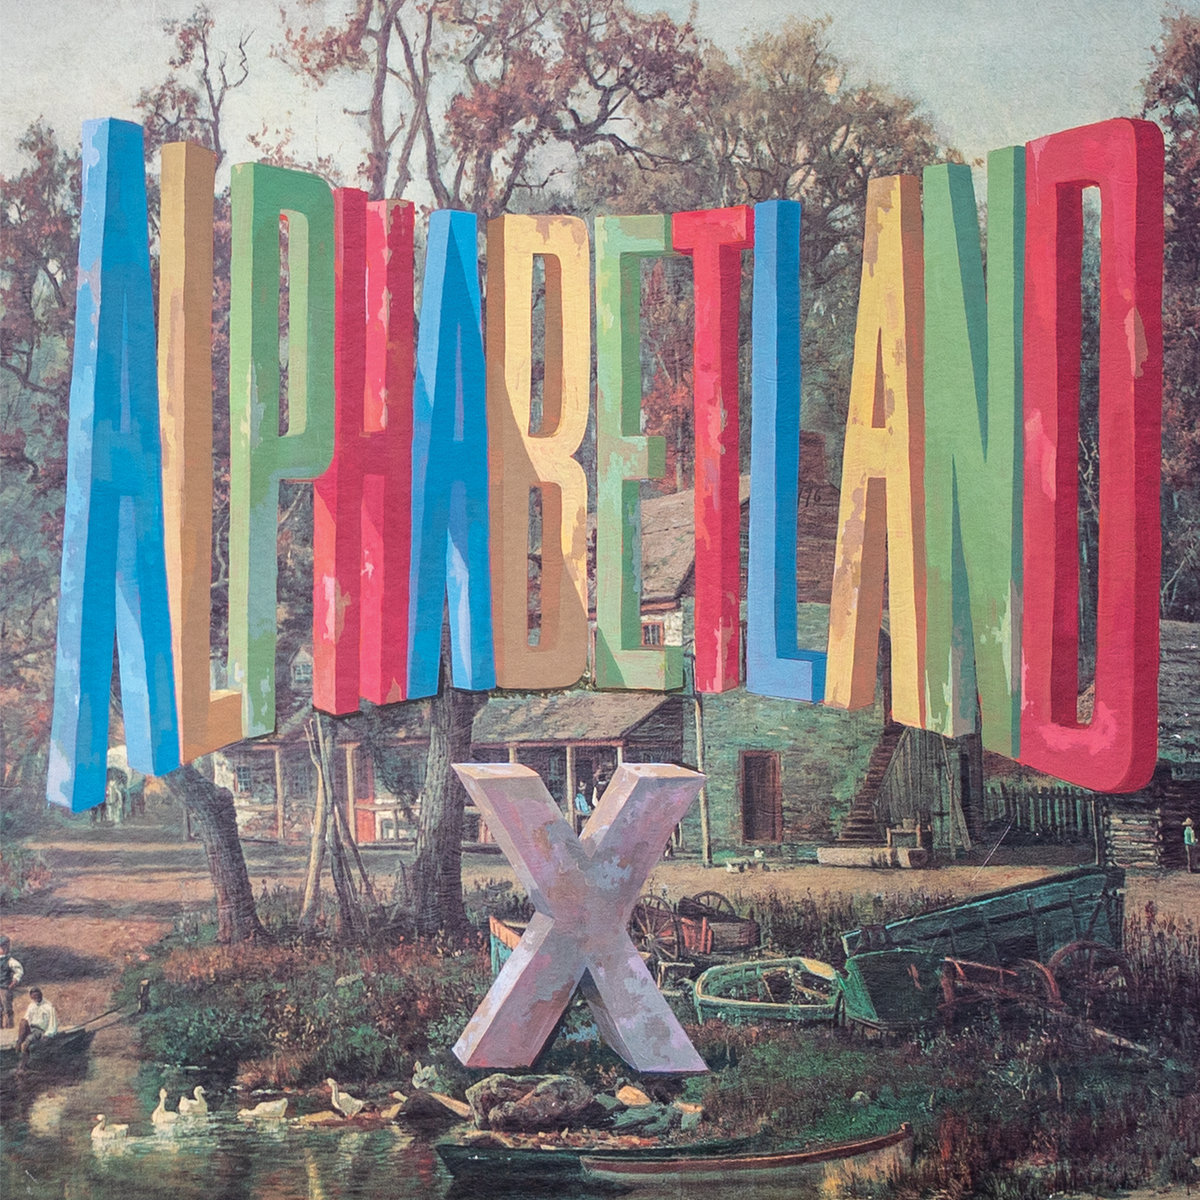 X -  Alphabetland (Ltd. Edition Color Vinyl) - LP